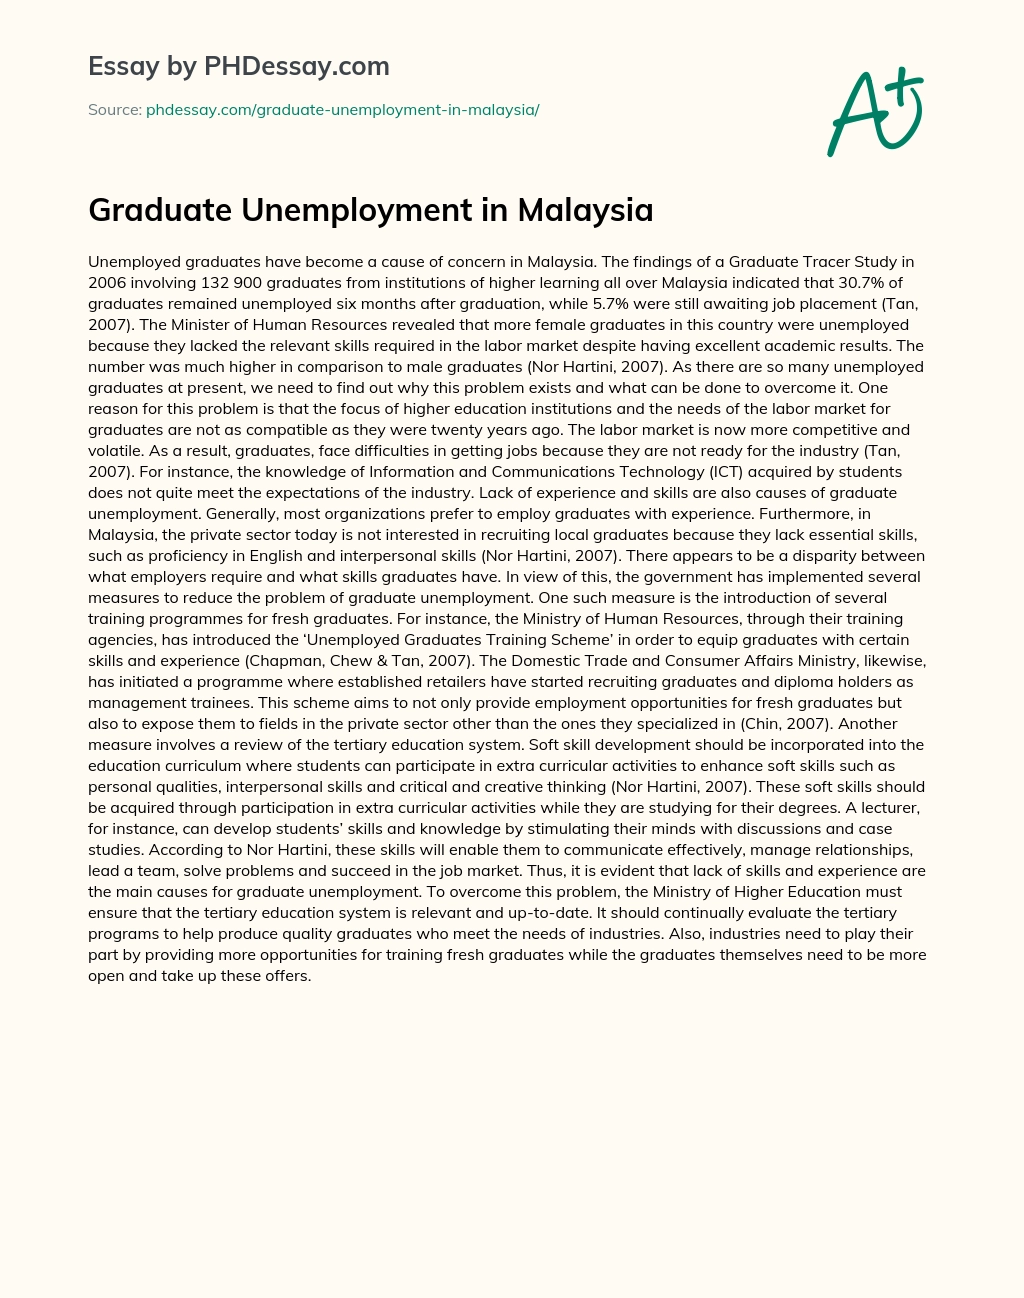 Graduate Unemployment in Malaysia essay